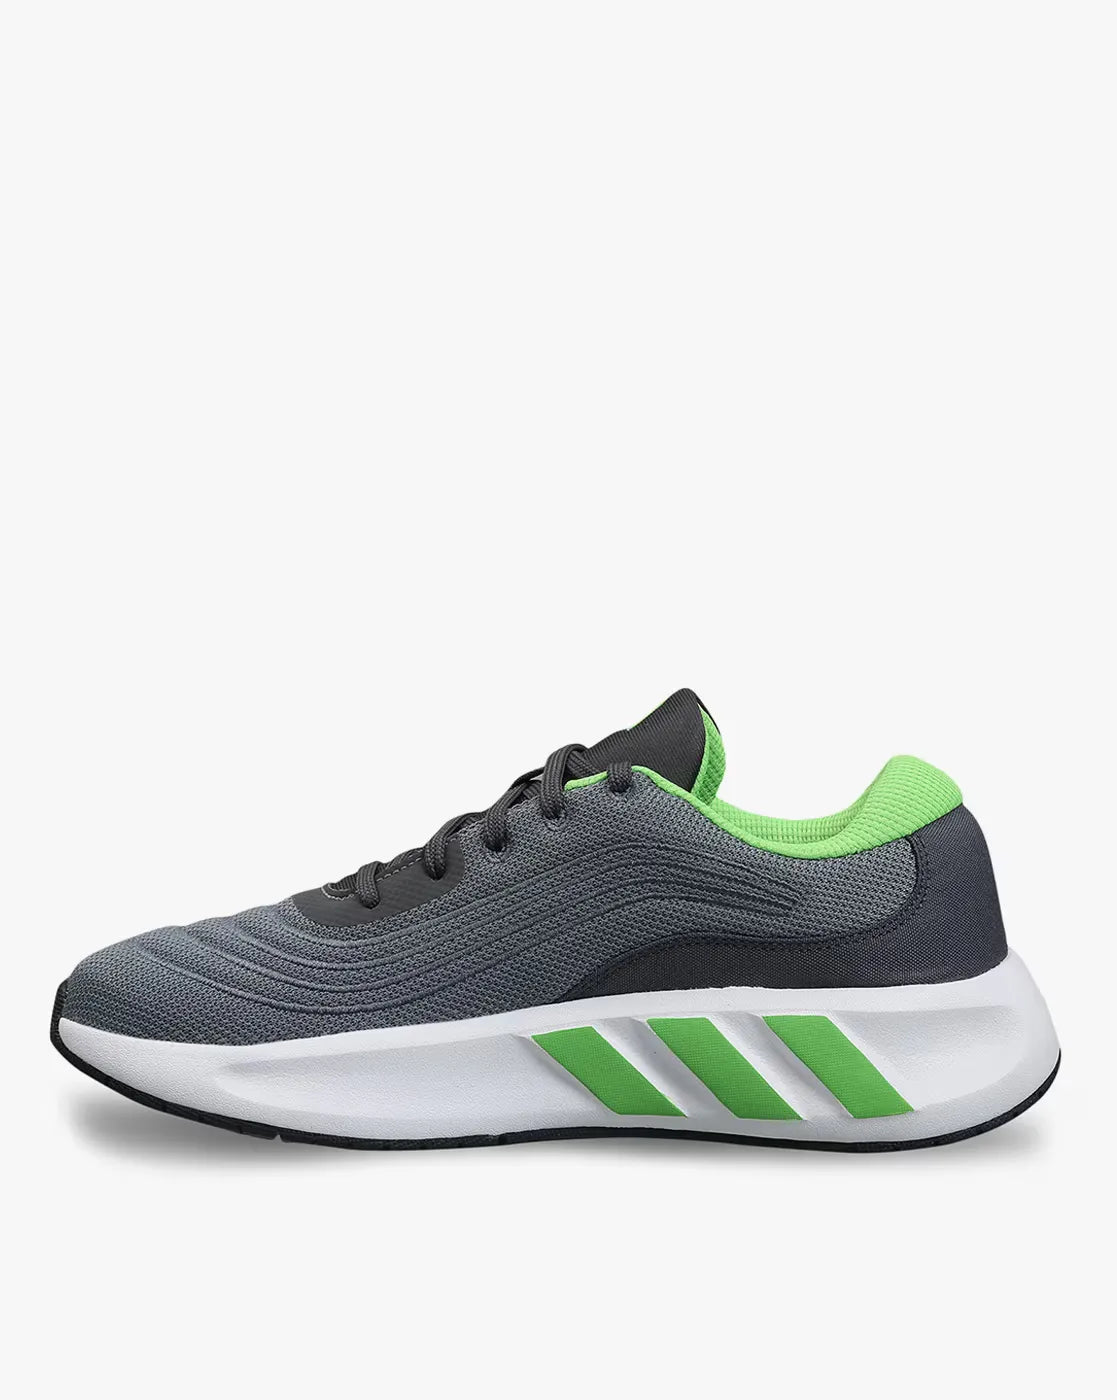 Adidas IQ9021 Cloud Tec Men's Running Shoes - Defy Gravity